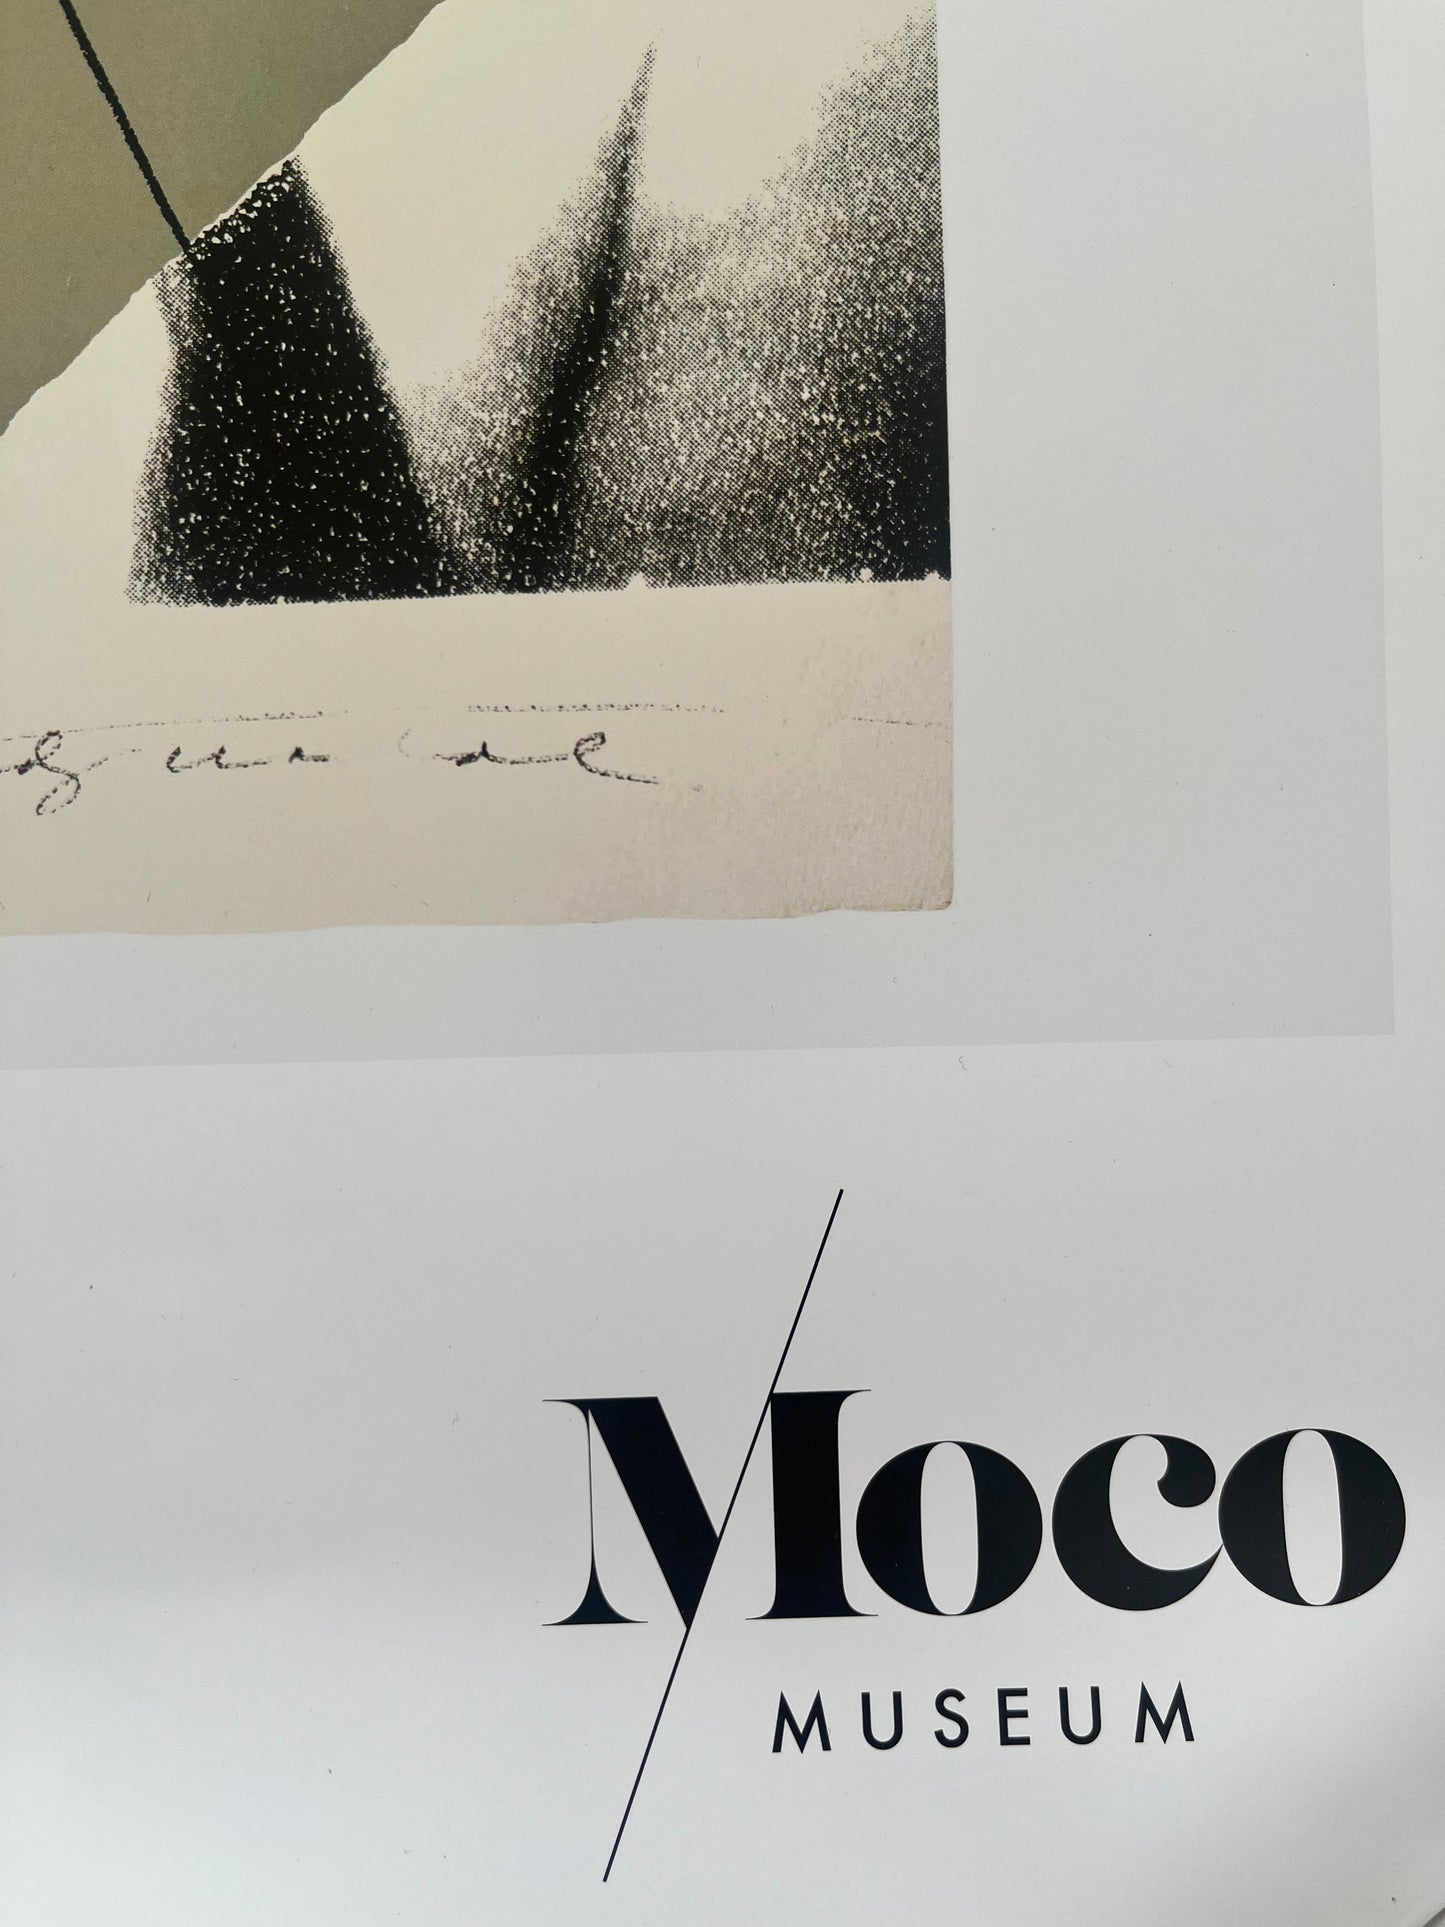 Serigrafía offset - Andy Warhol x MocoMuseum - Mick Jagger, 1975